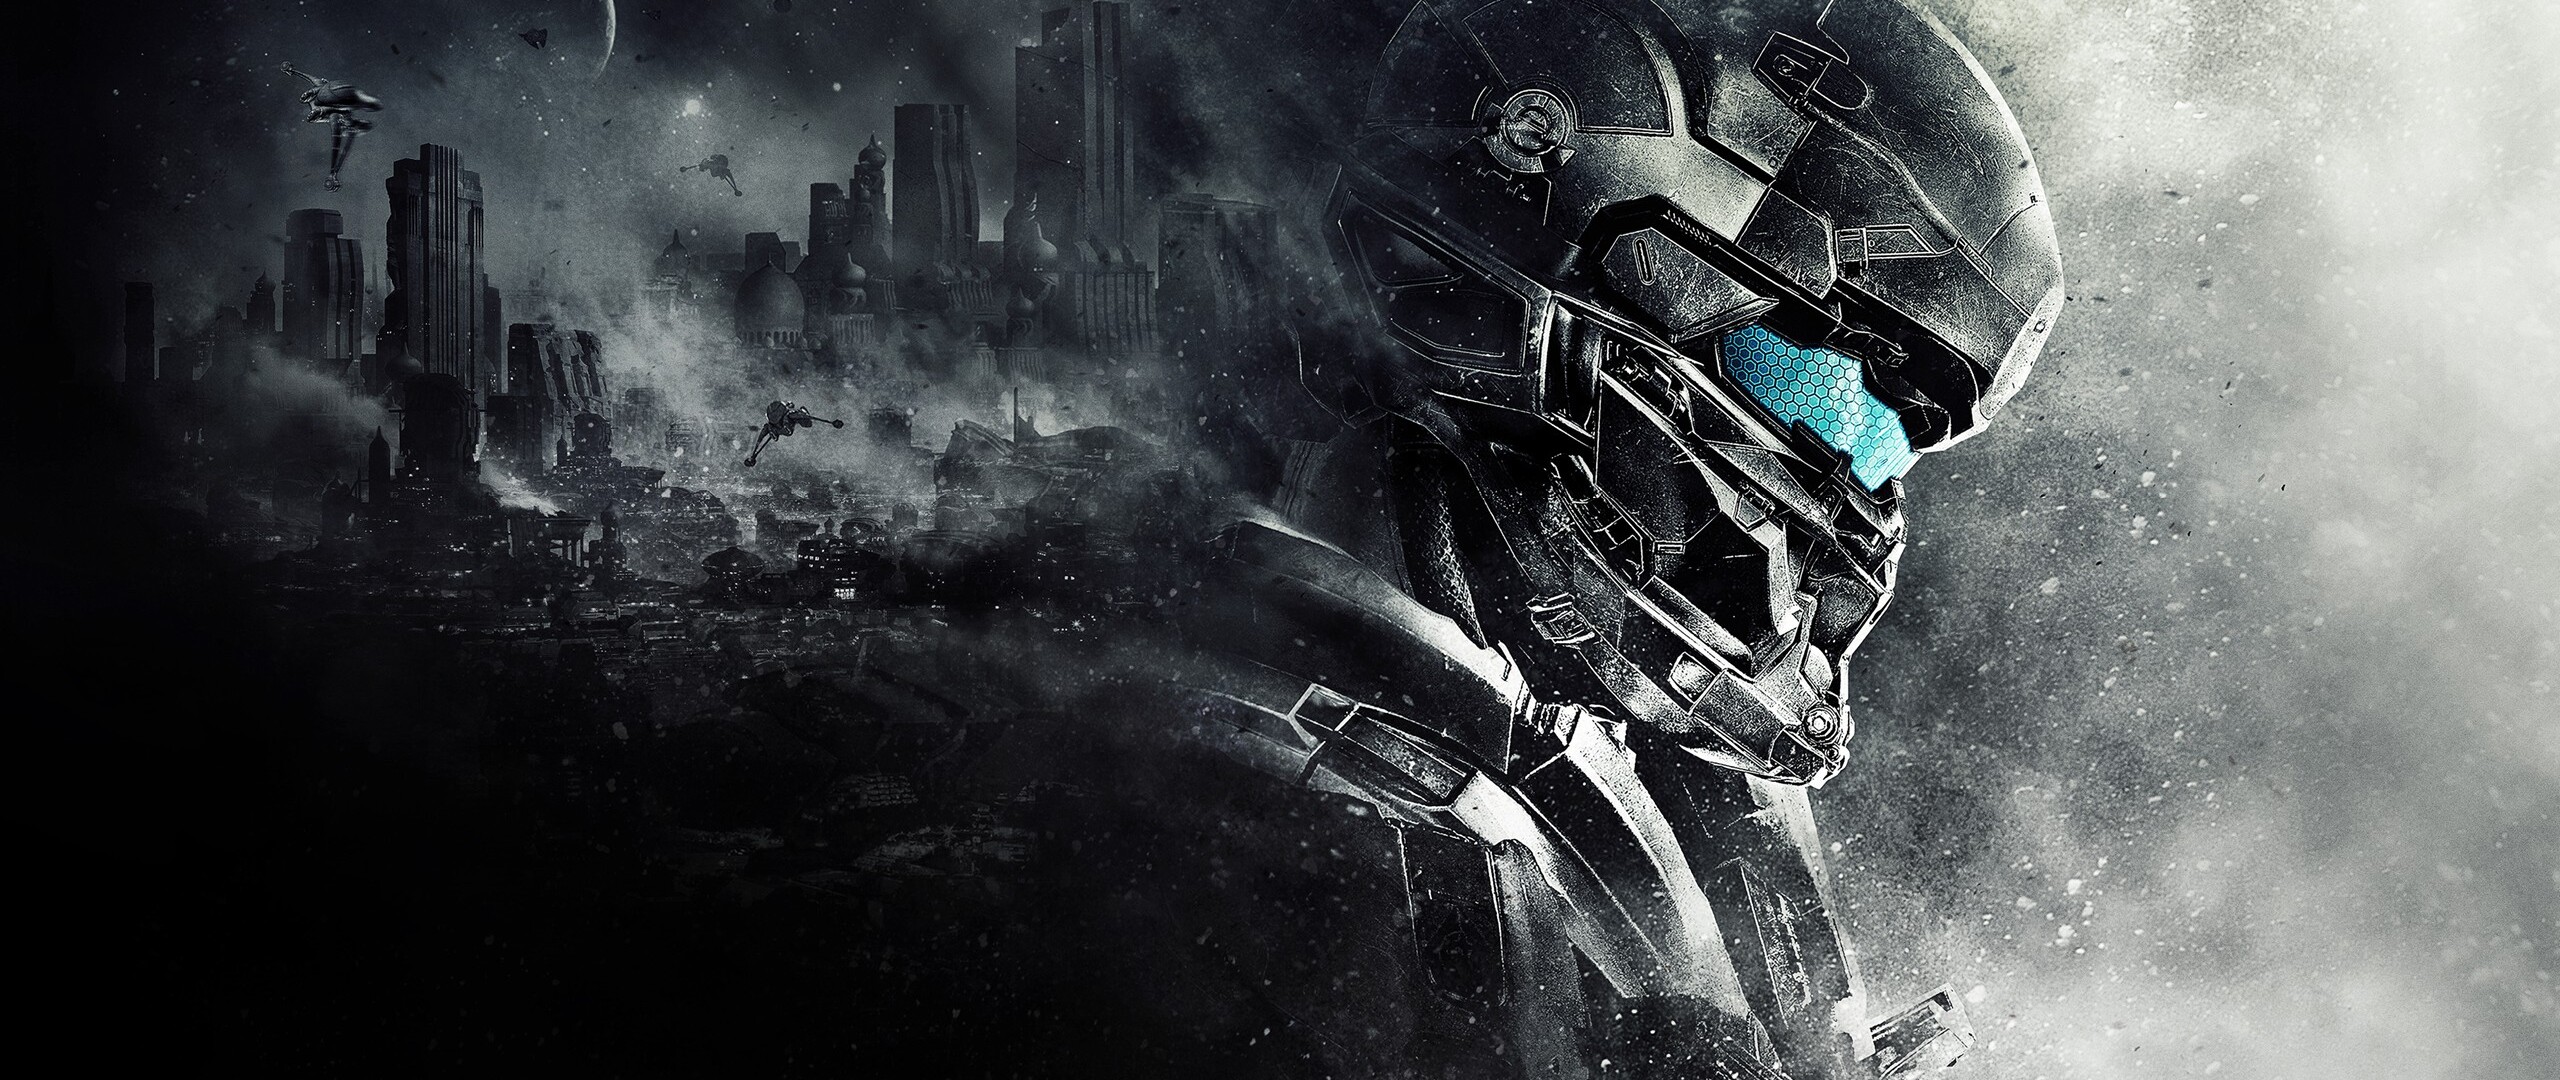 Spartan Locke Halo 5 In 2560x1080 Resolution. spartan-locke-halo-5.jpg. 